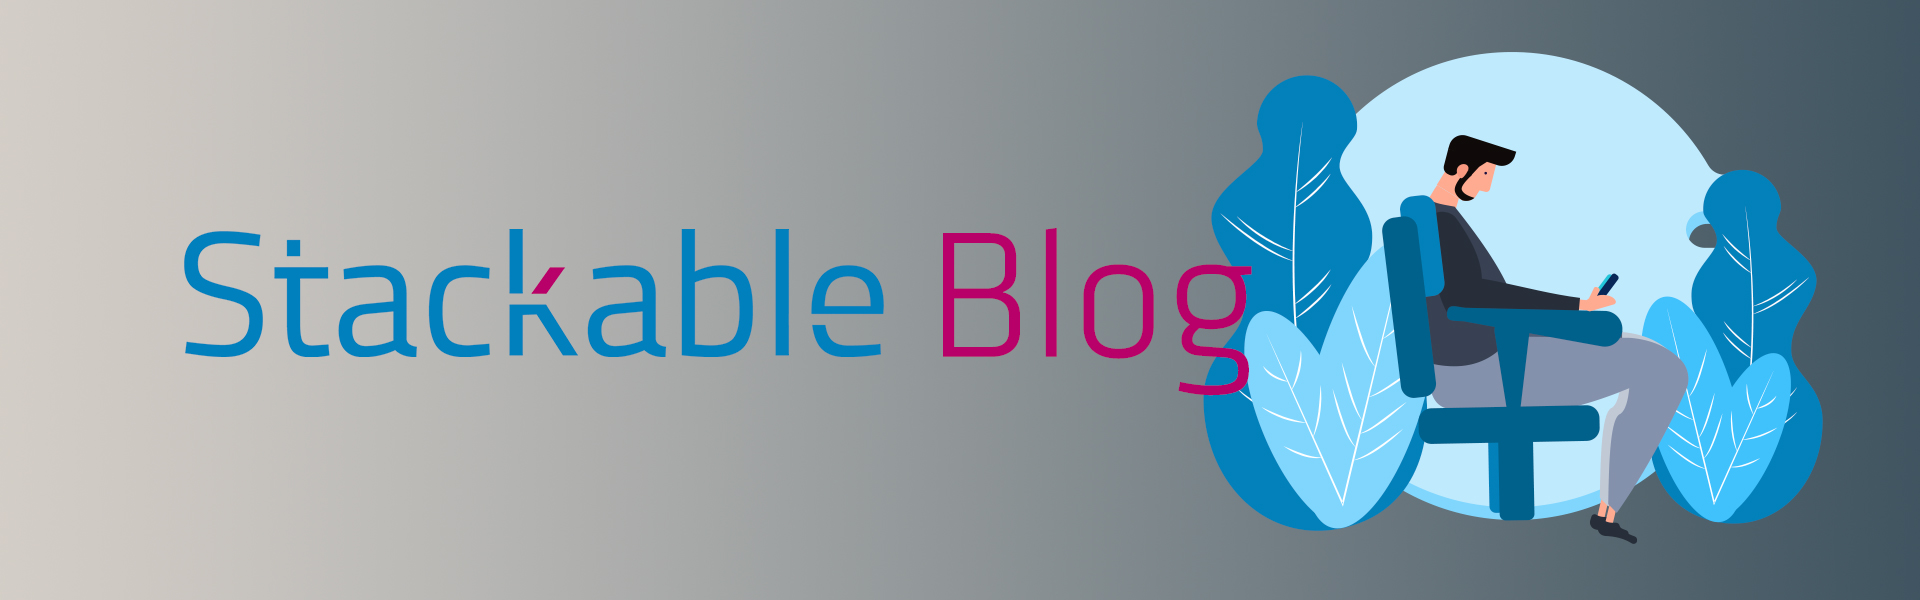 stackable-blog-header-hellgrau